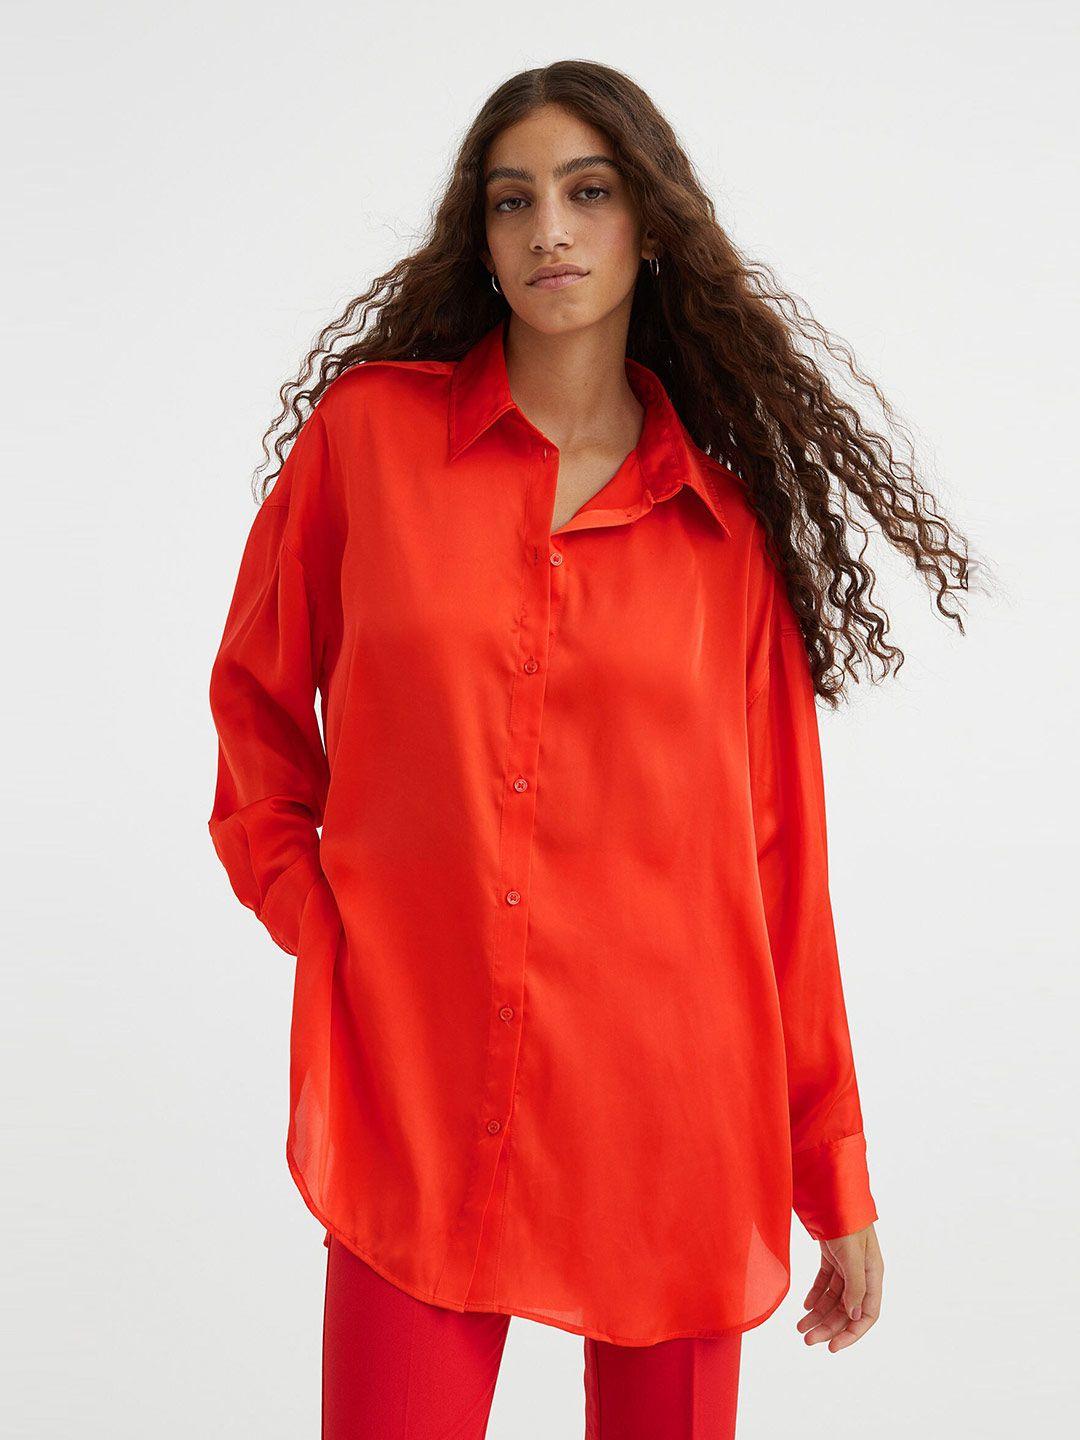 h&m woman orange oversized blouse